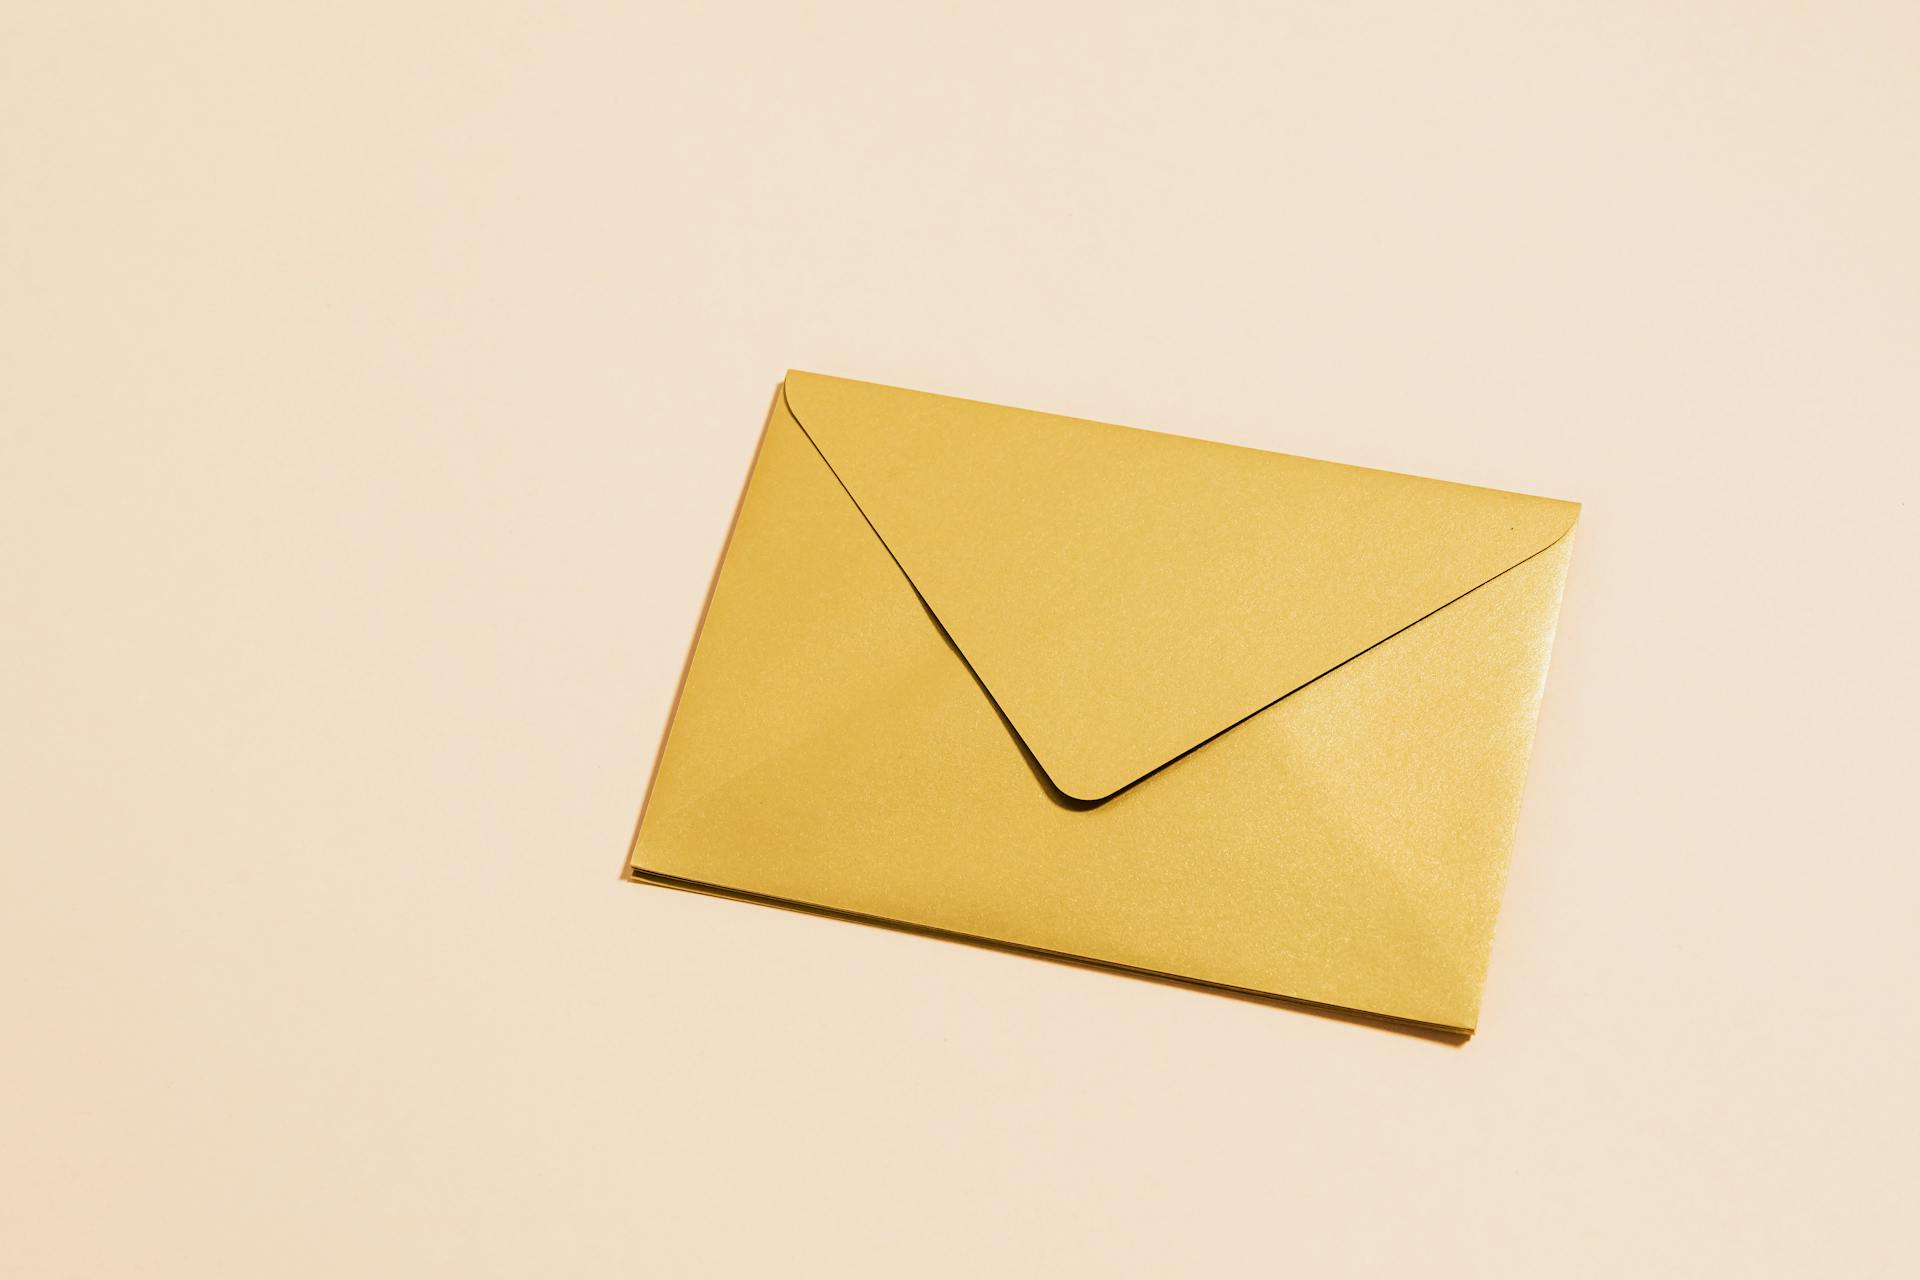 An envelope | Source: Pexels